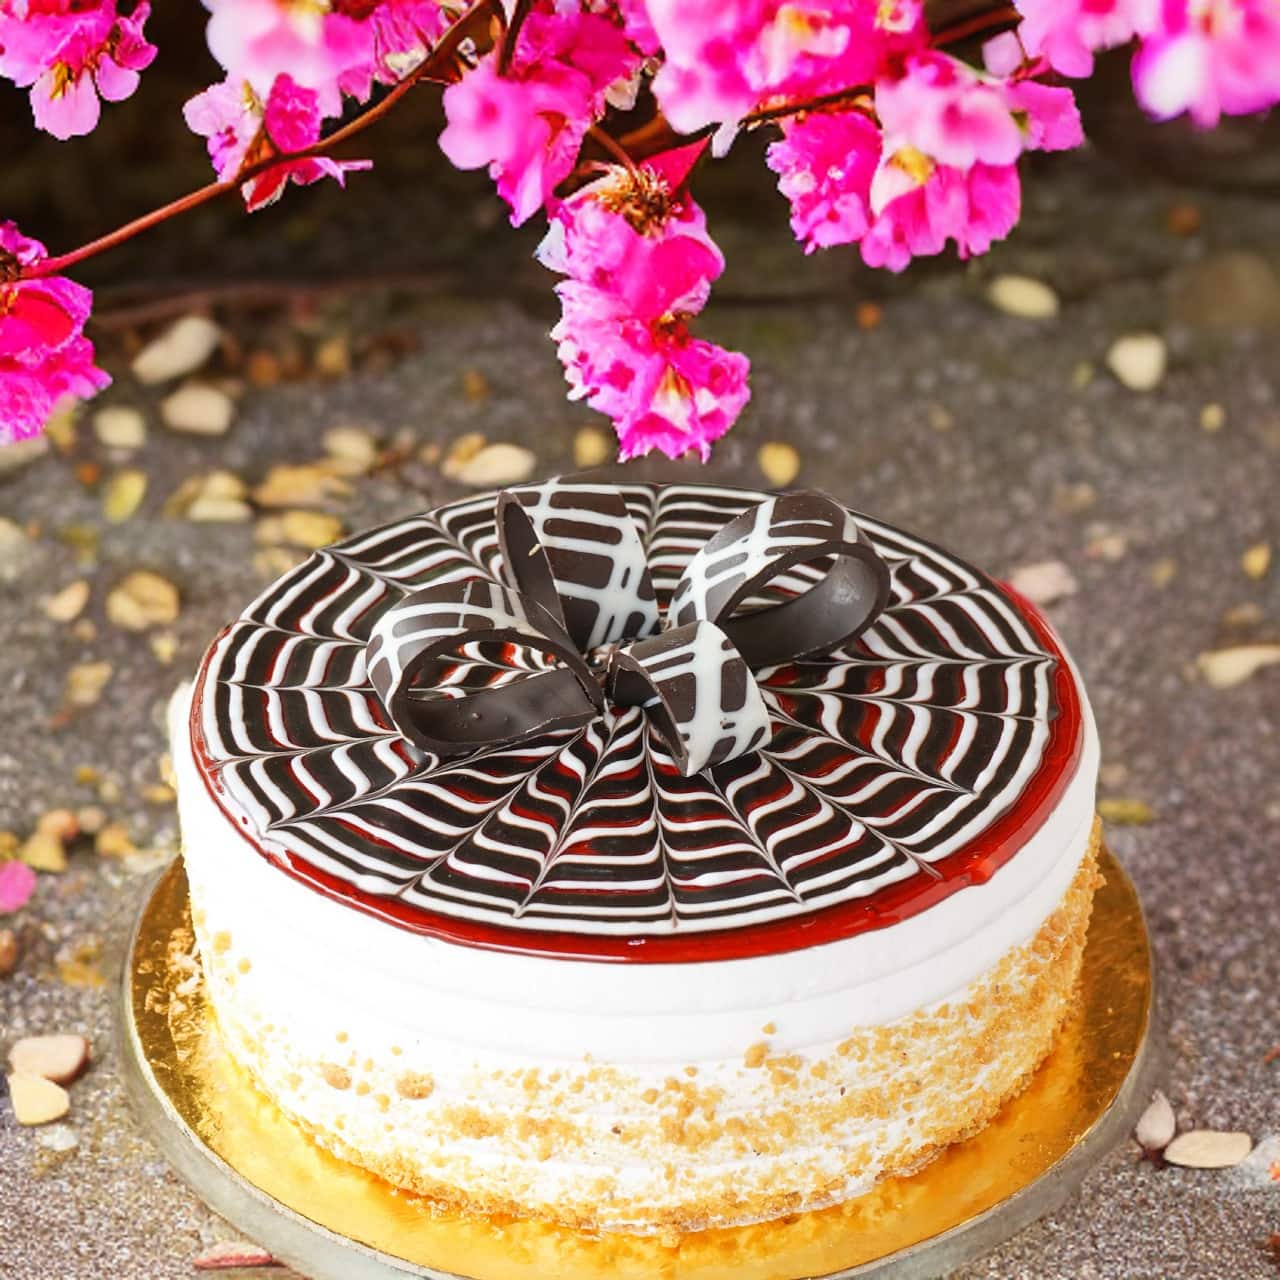 Update more than 72 bake n cake viman nagar latest - in.daotaonec